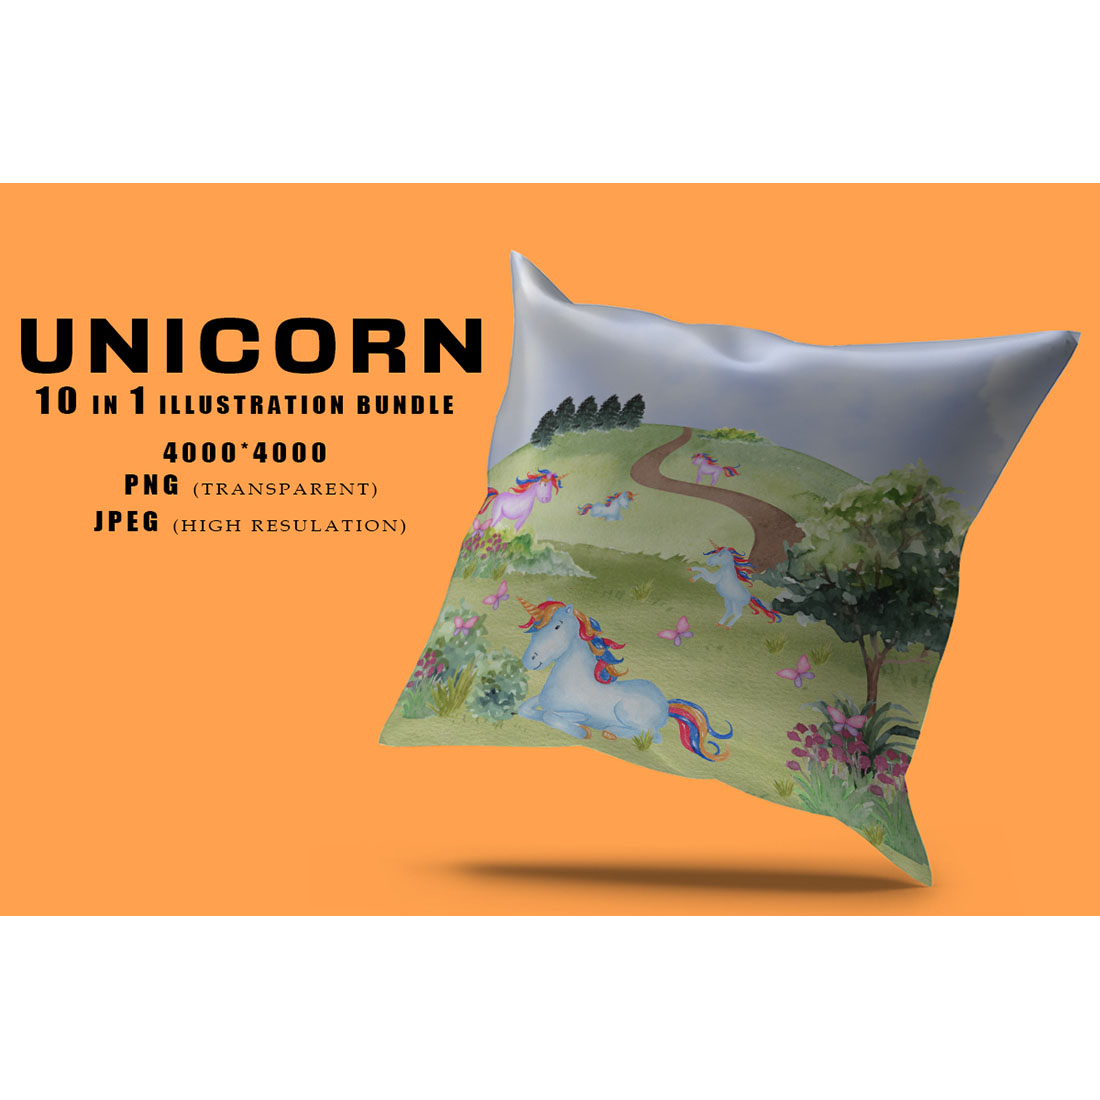 Pillow image with enchanting unicorn print